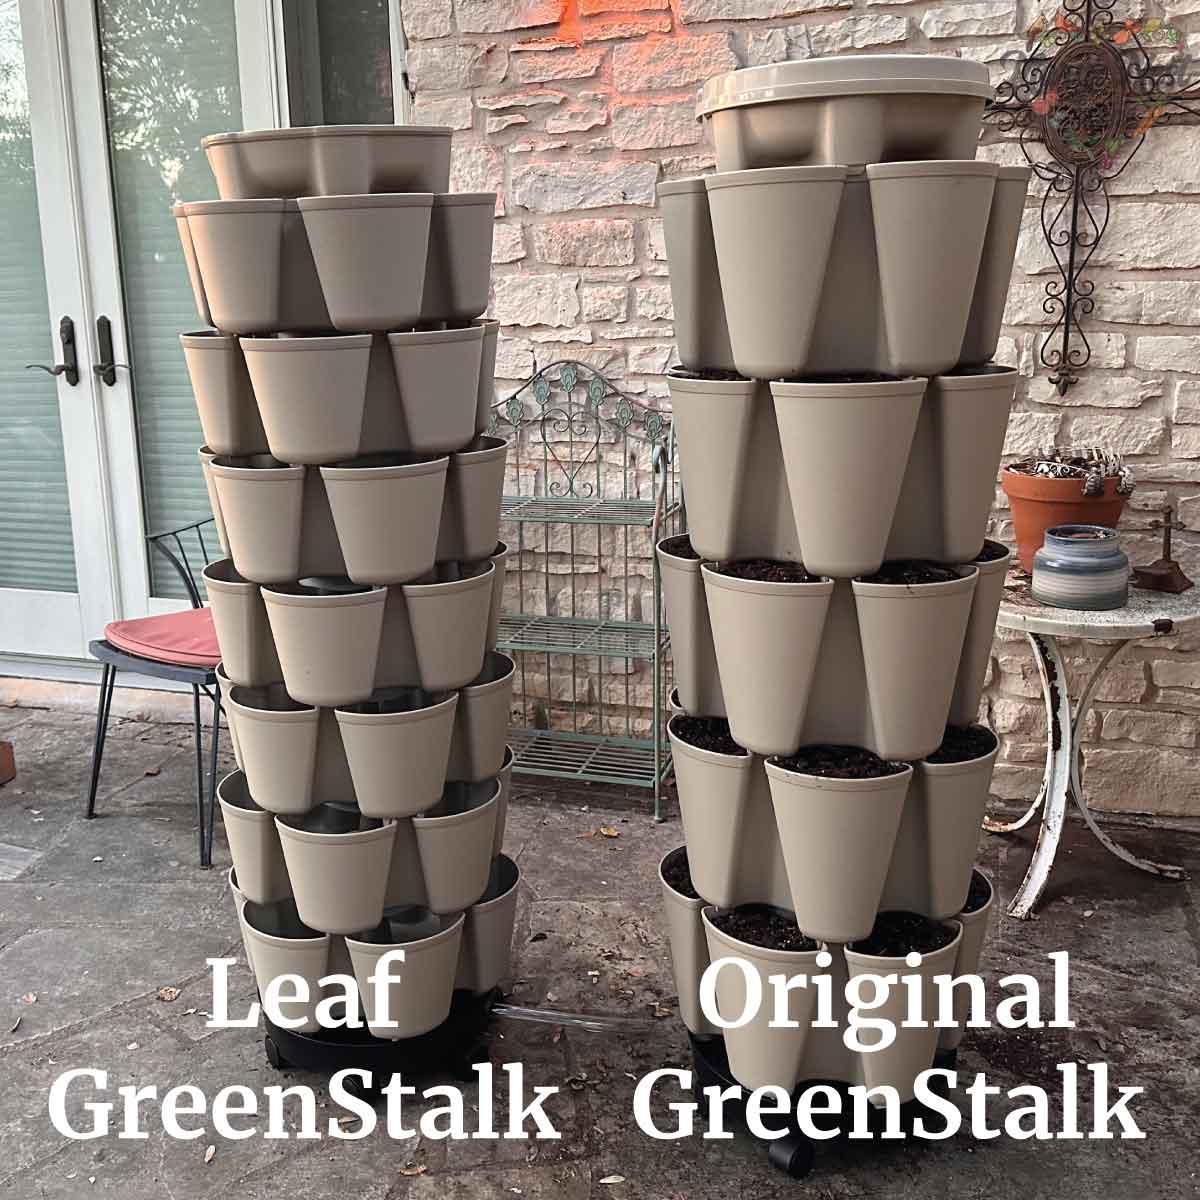 Showing the assembled GreenStalk Leaf and Original versions side by side.